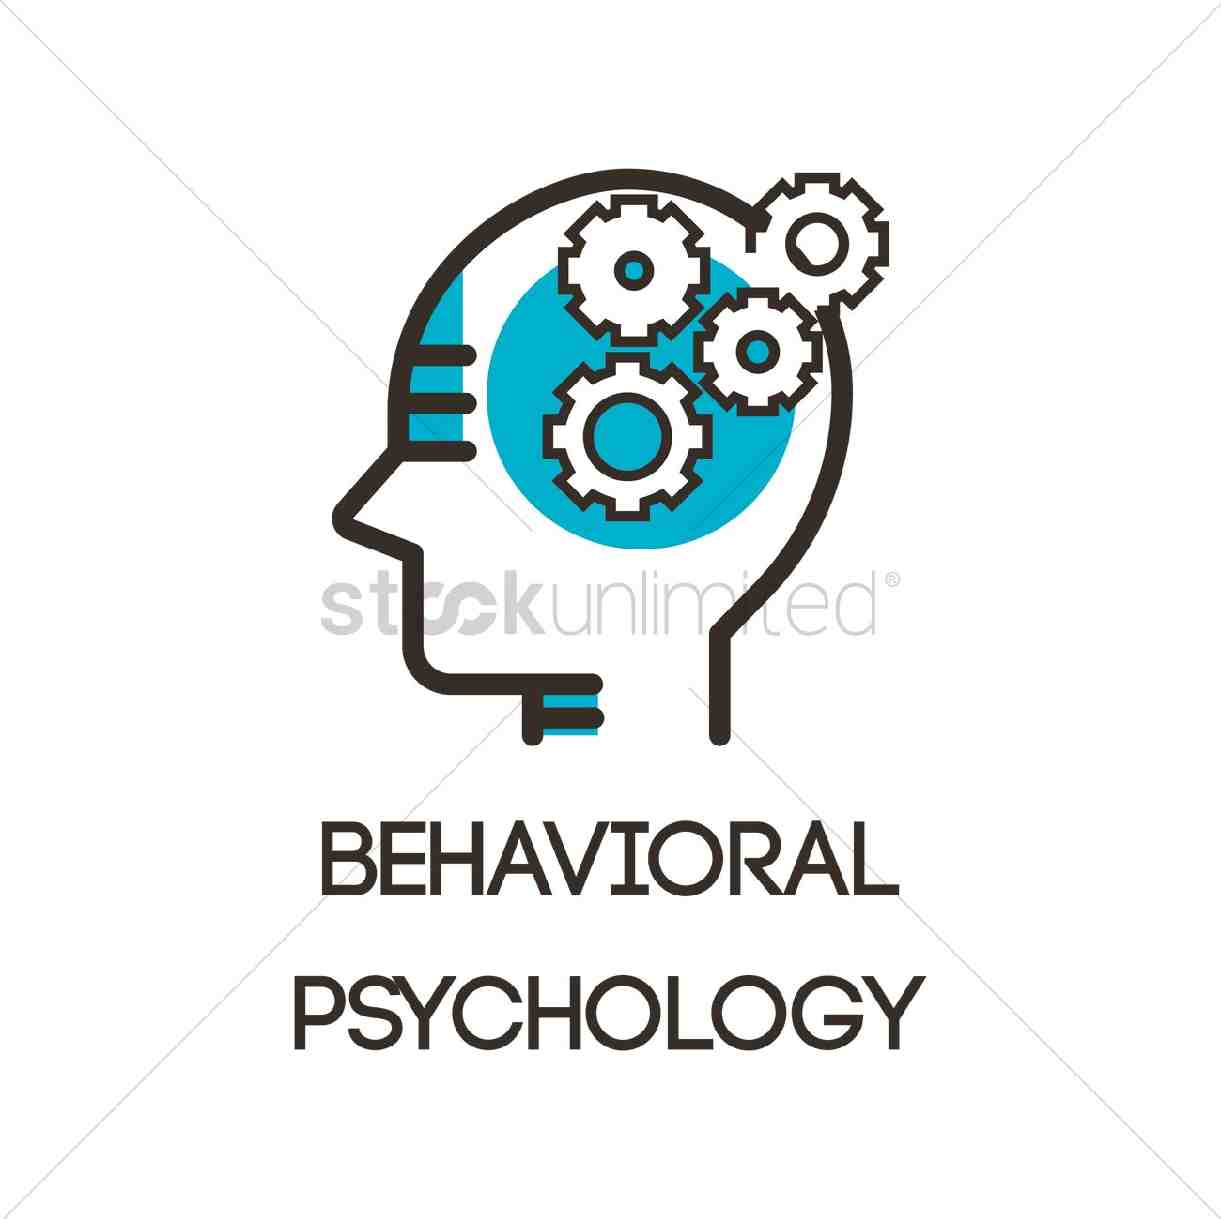 Behavioural Psychology